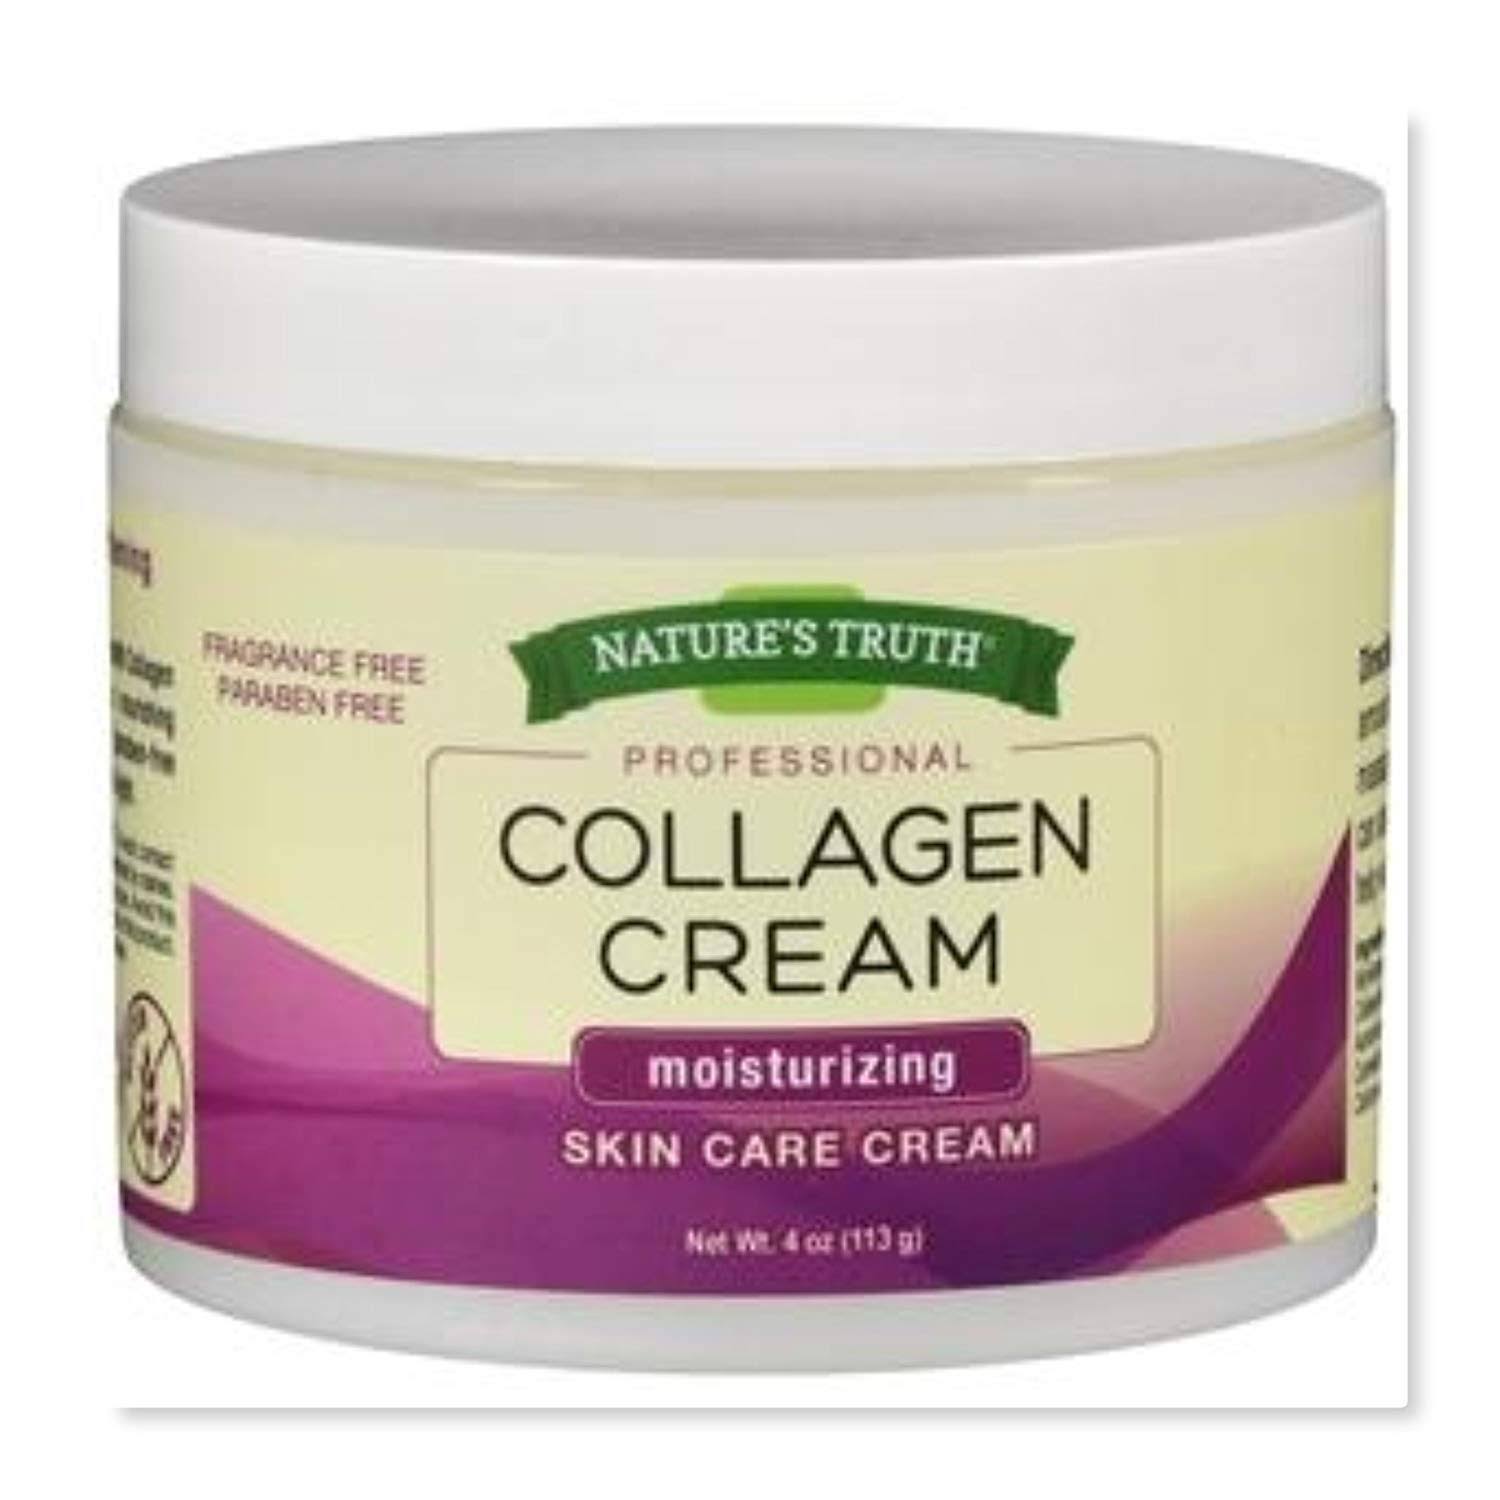 Natures Truth Professional Collagen Cream Skin Care Cream, 4 Ounce